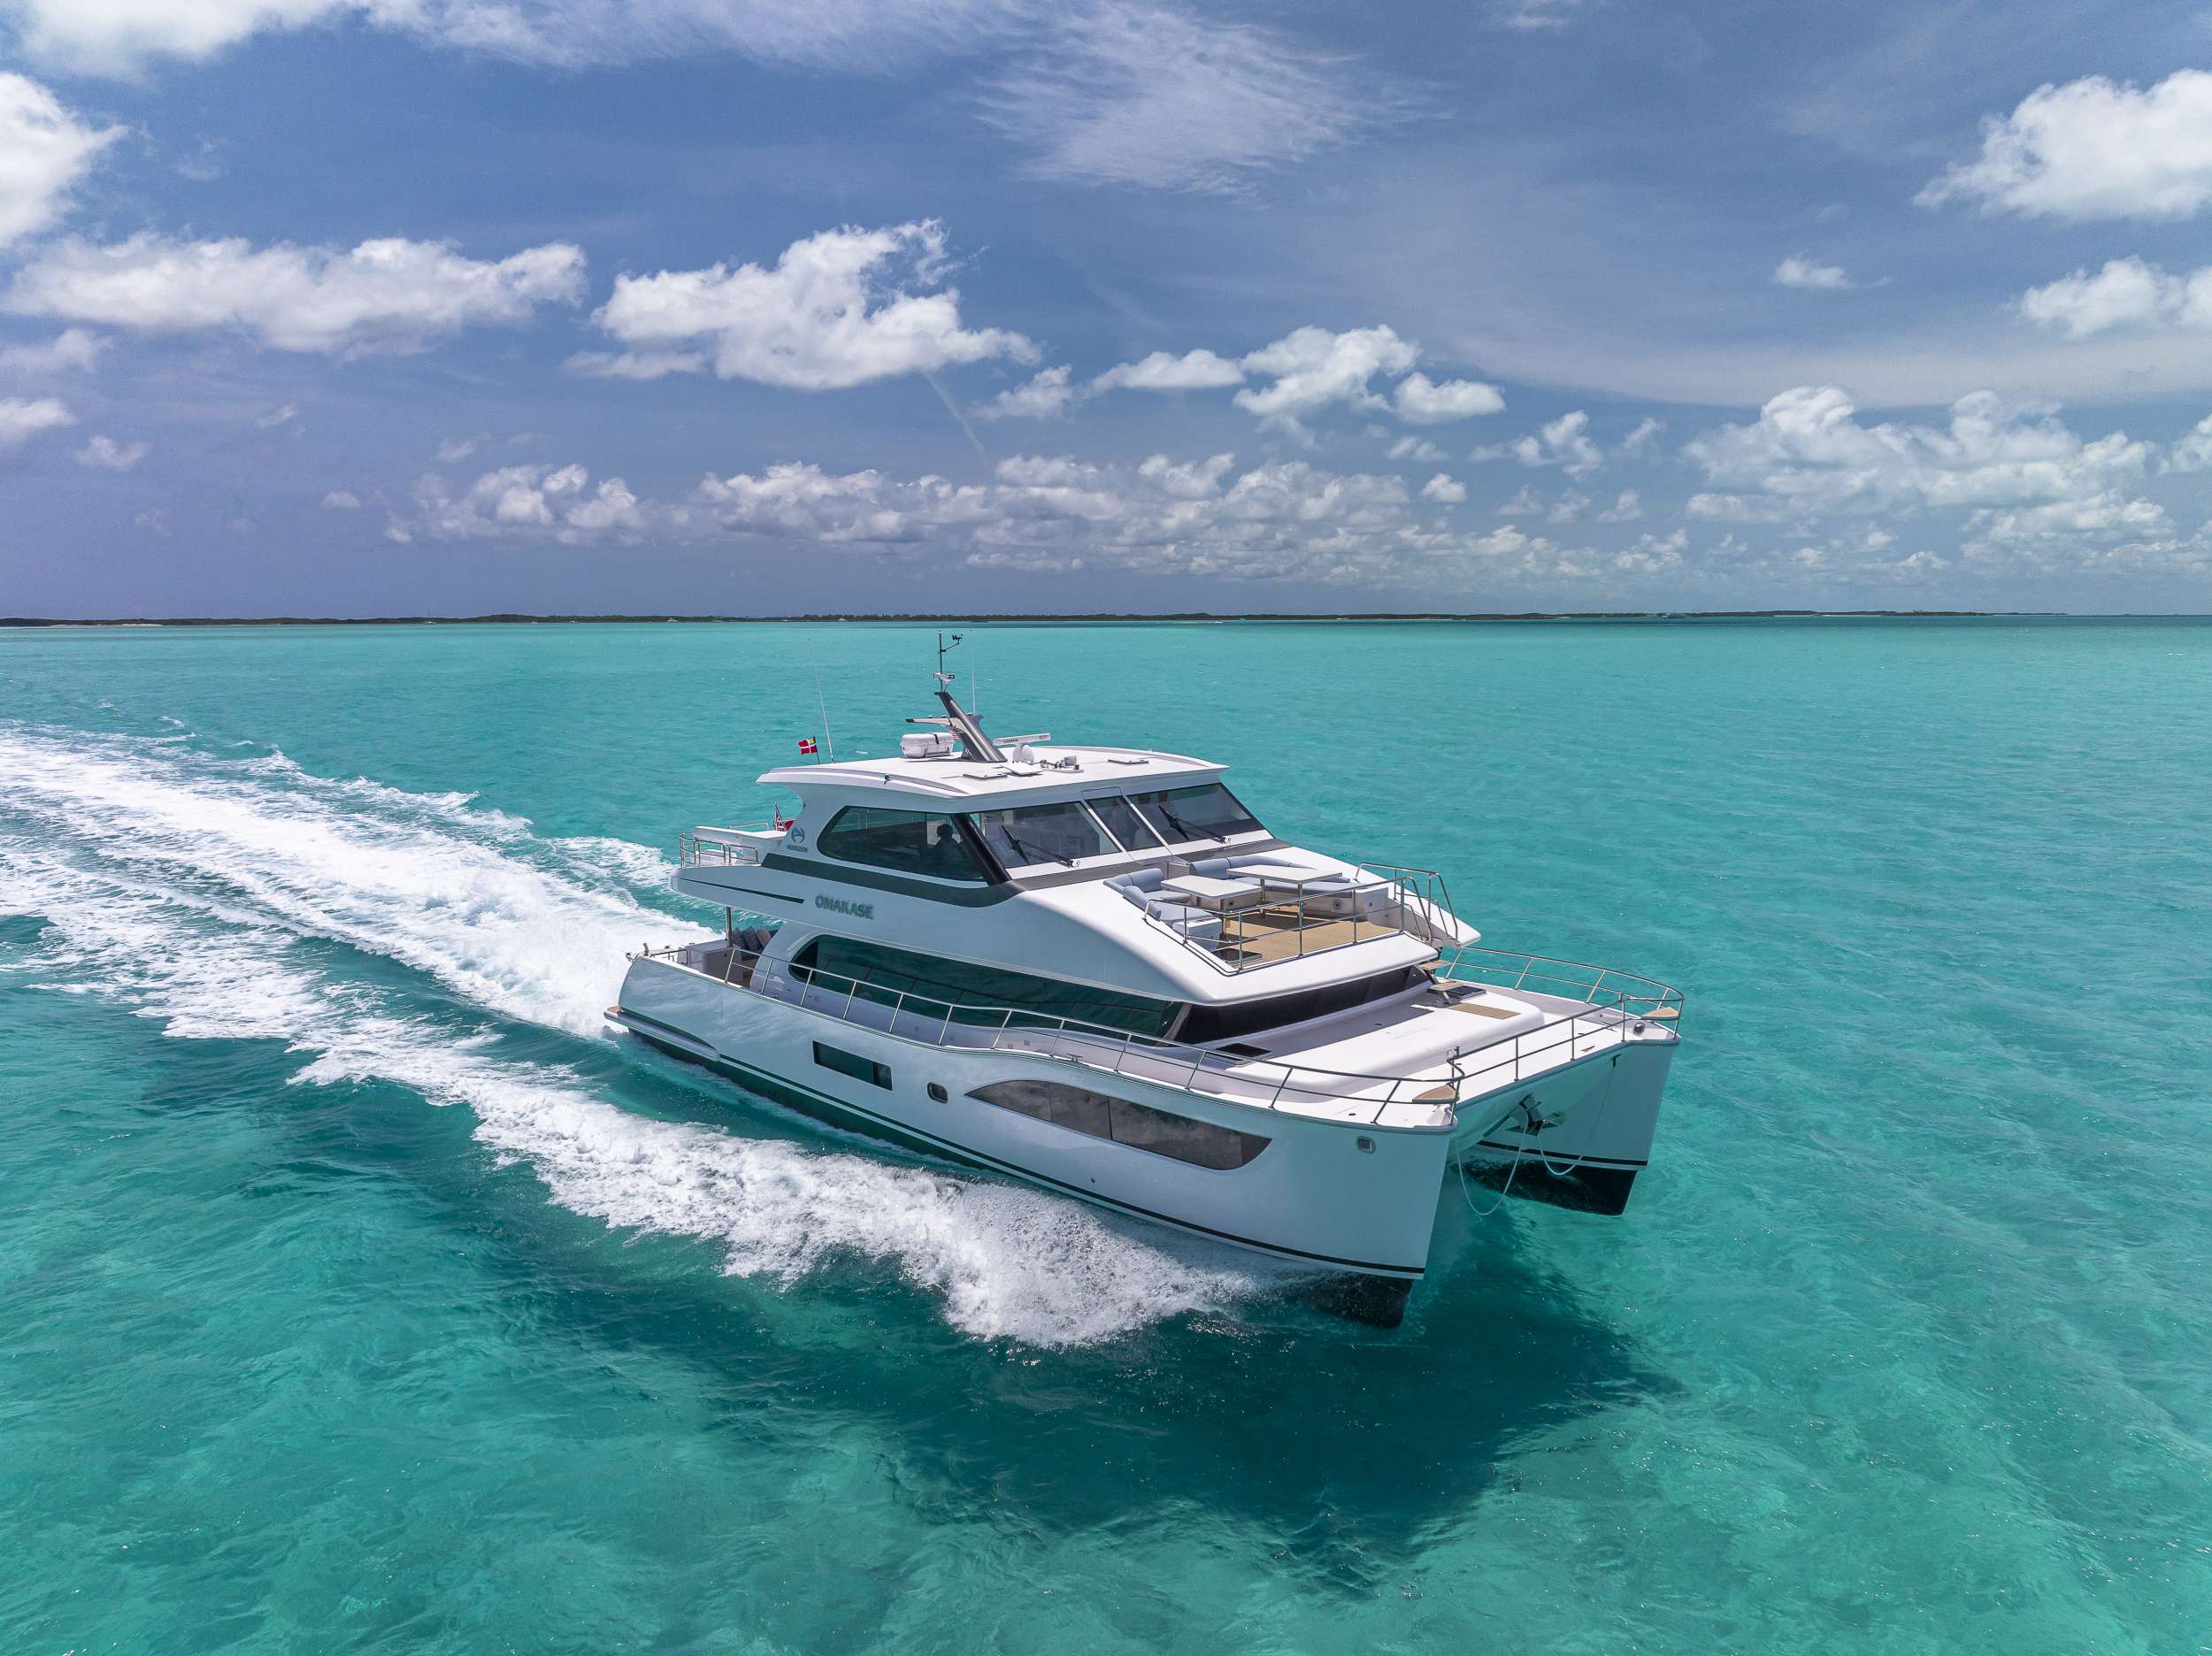 OMAKASE - Yacht Charter Guadeloupe & Boat hire in Bahamas & Caribbean 1